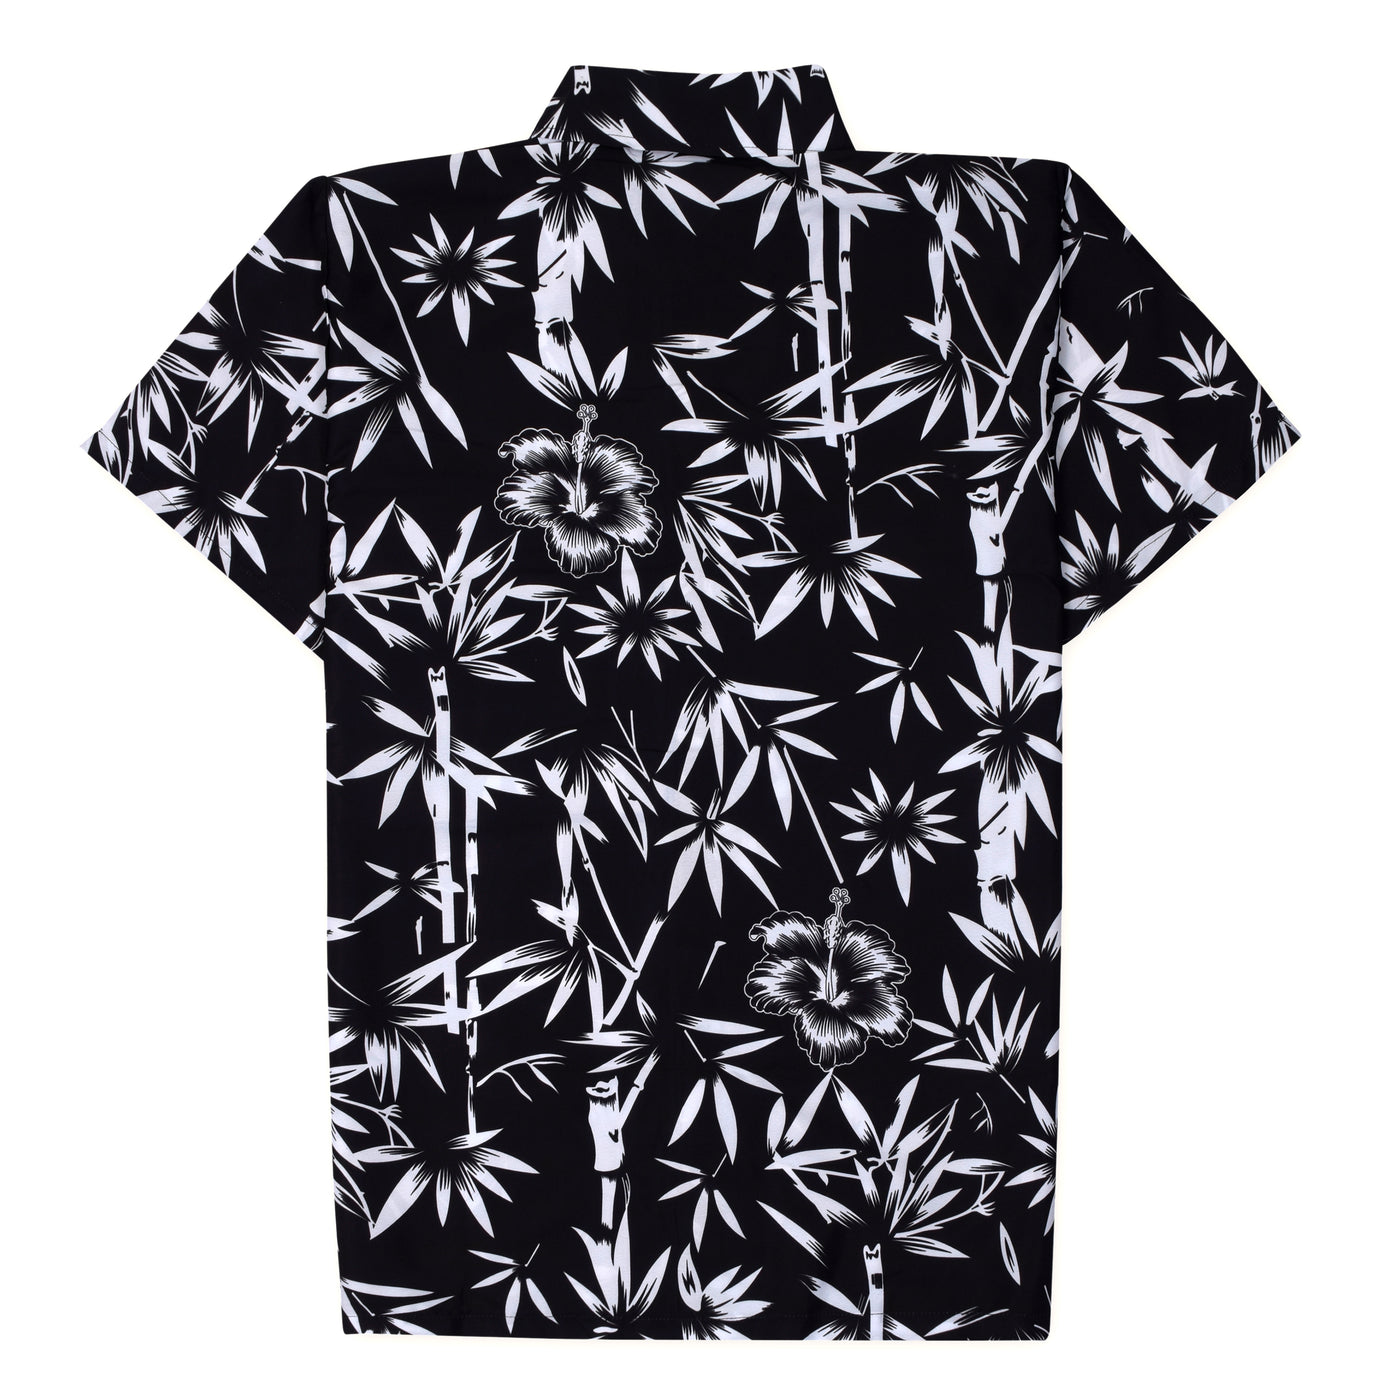 La camisa floral de bambú tropical